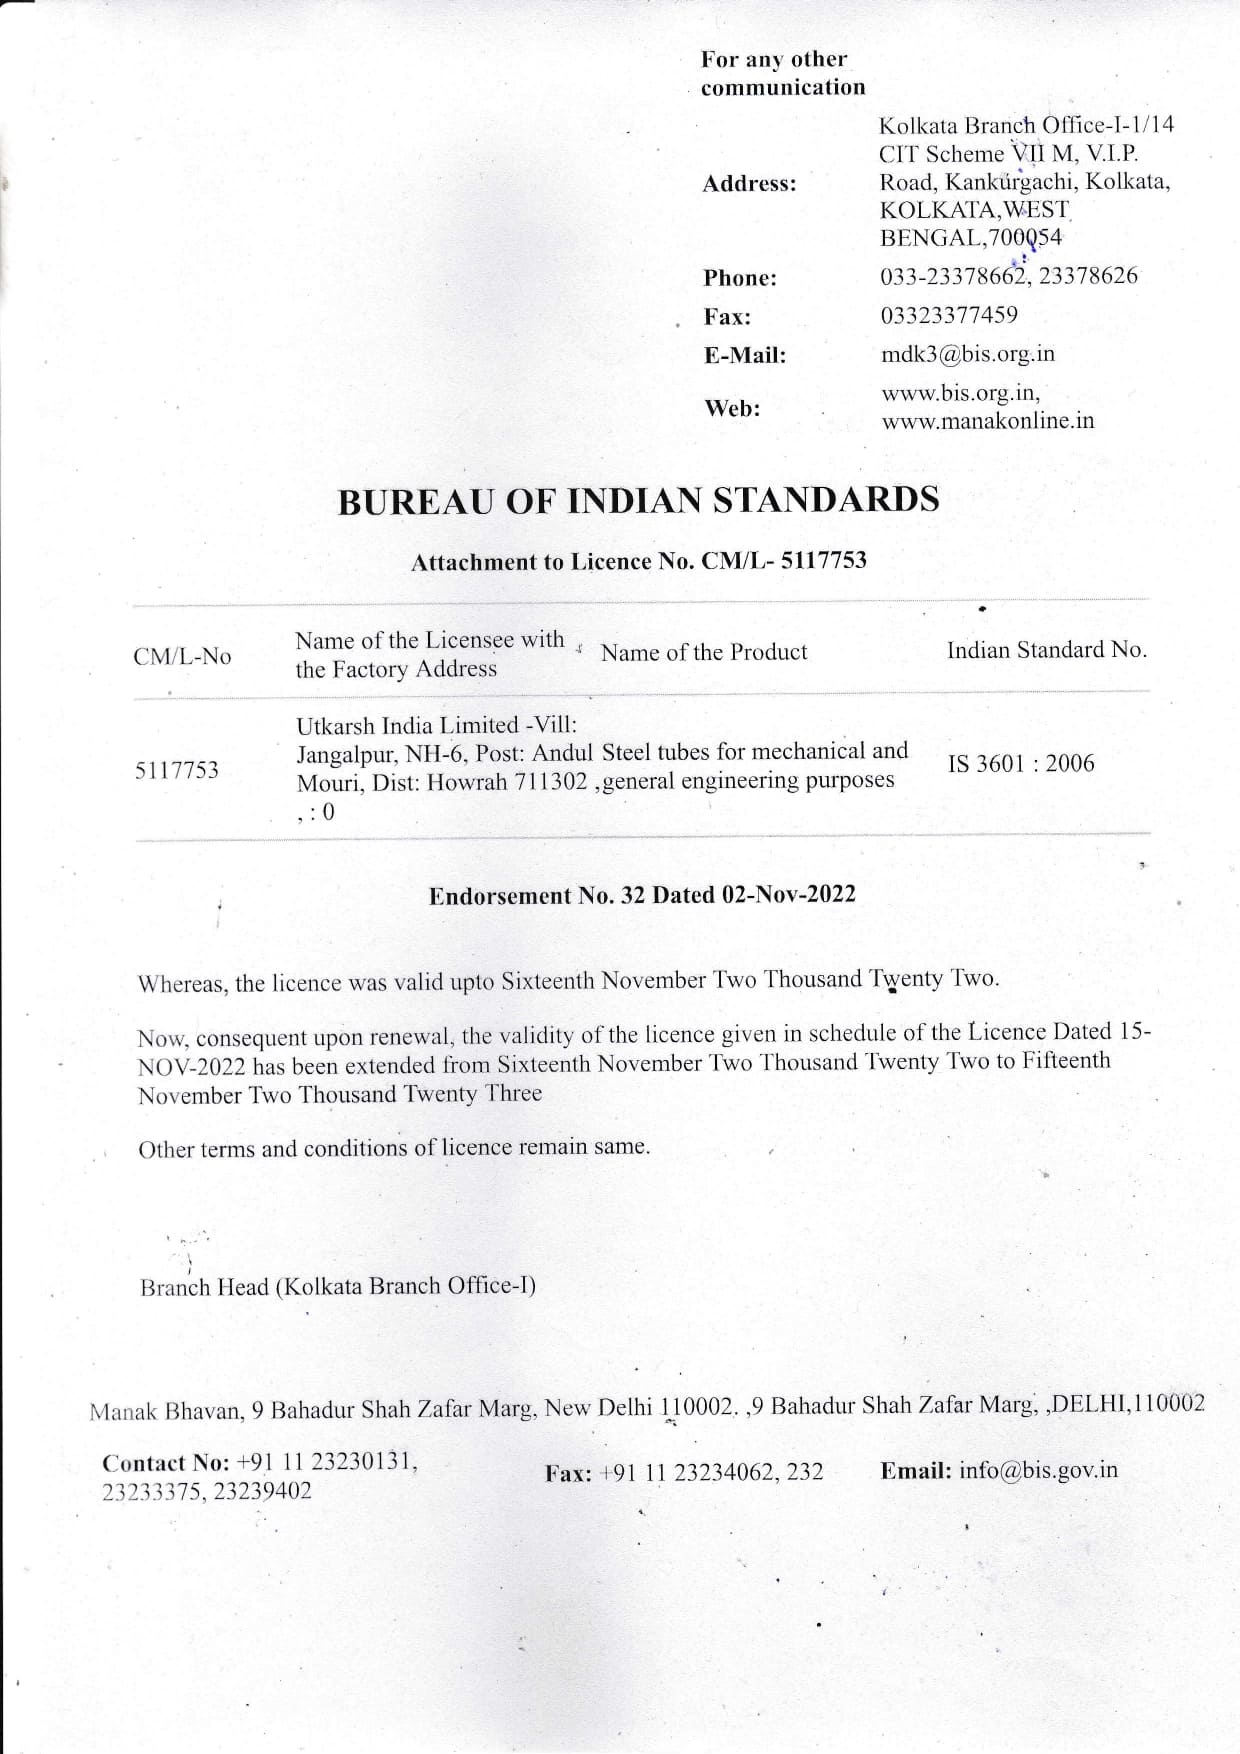 Bureau of Indian Standards IS 3601 2006